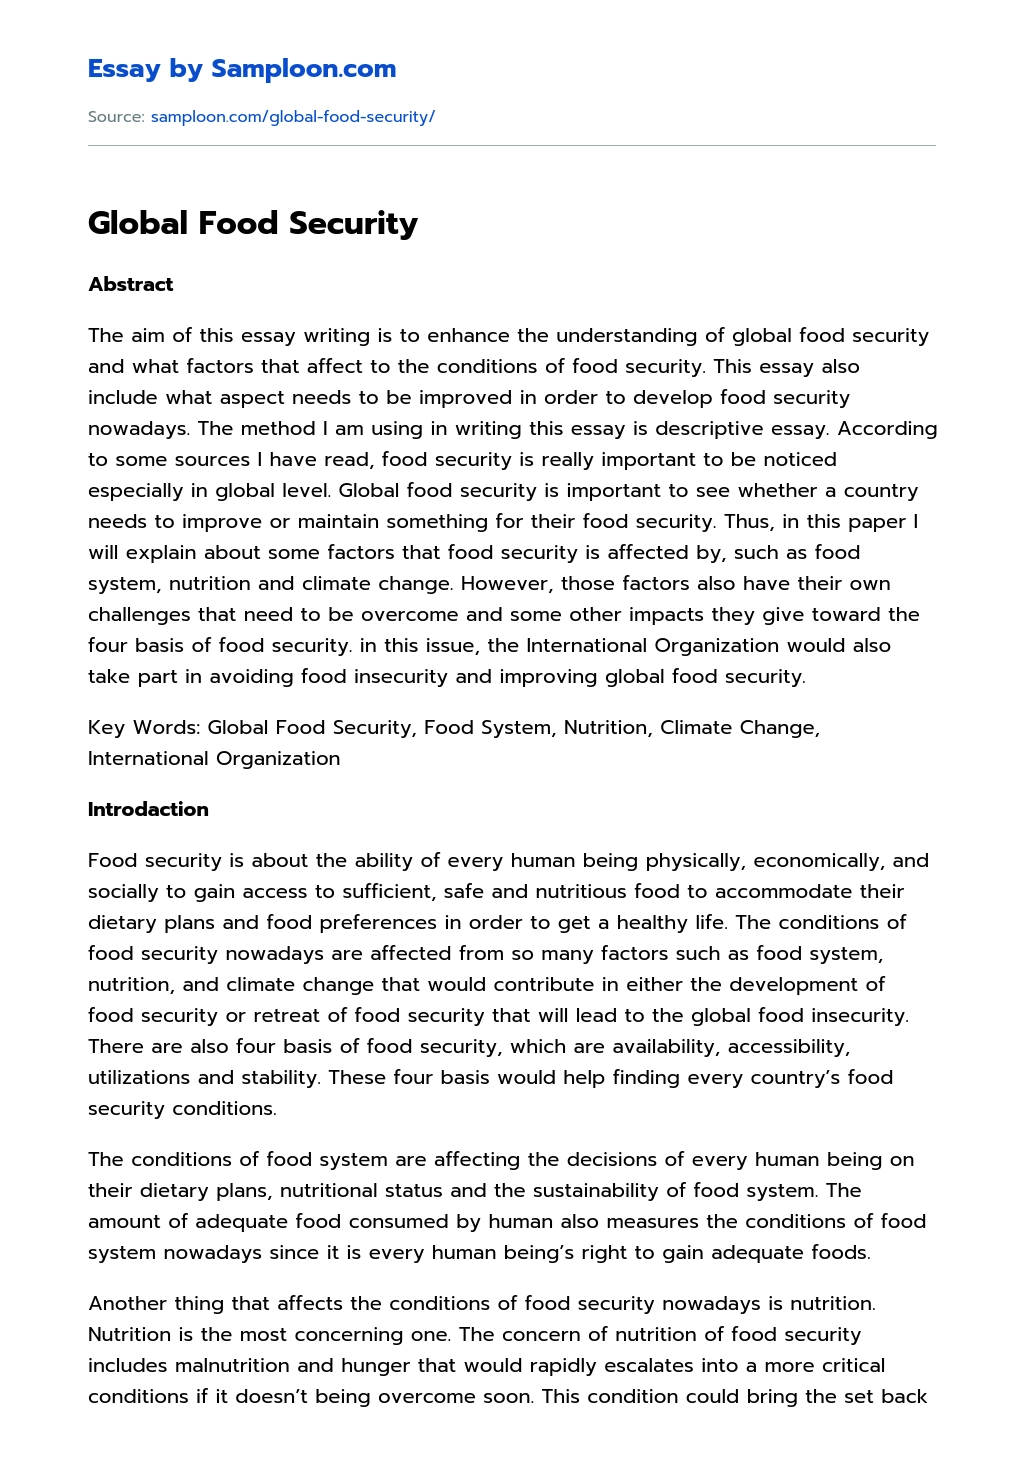 Global Food Security essay